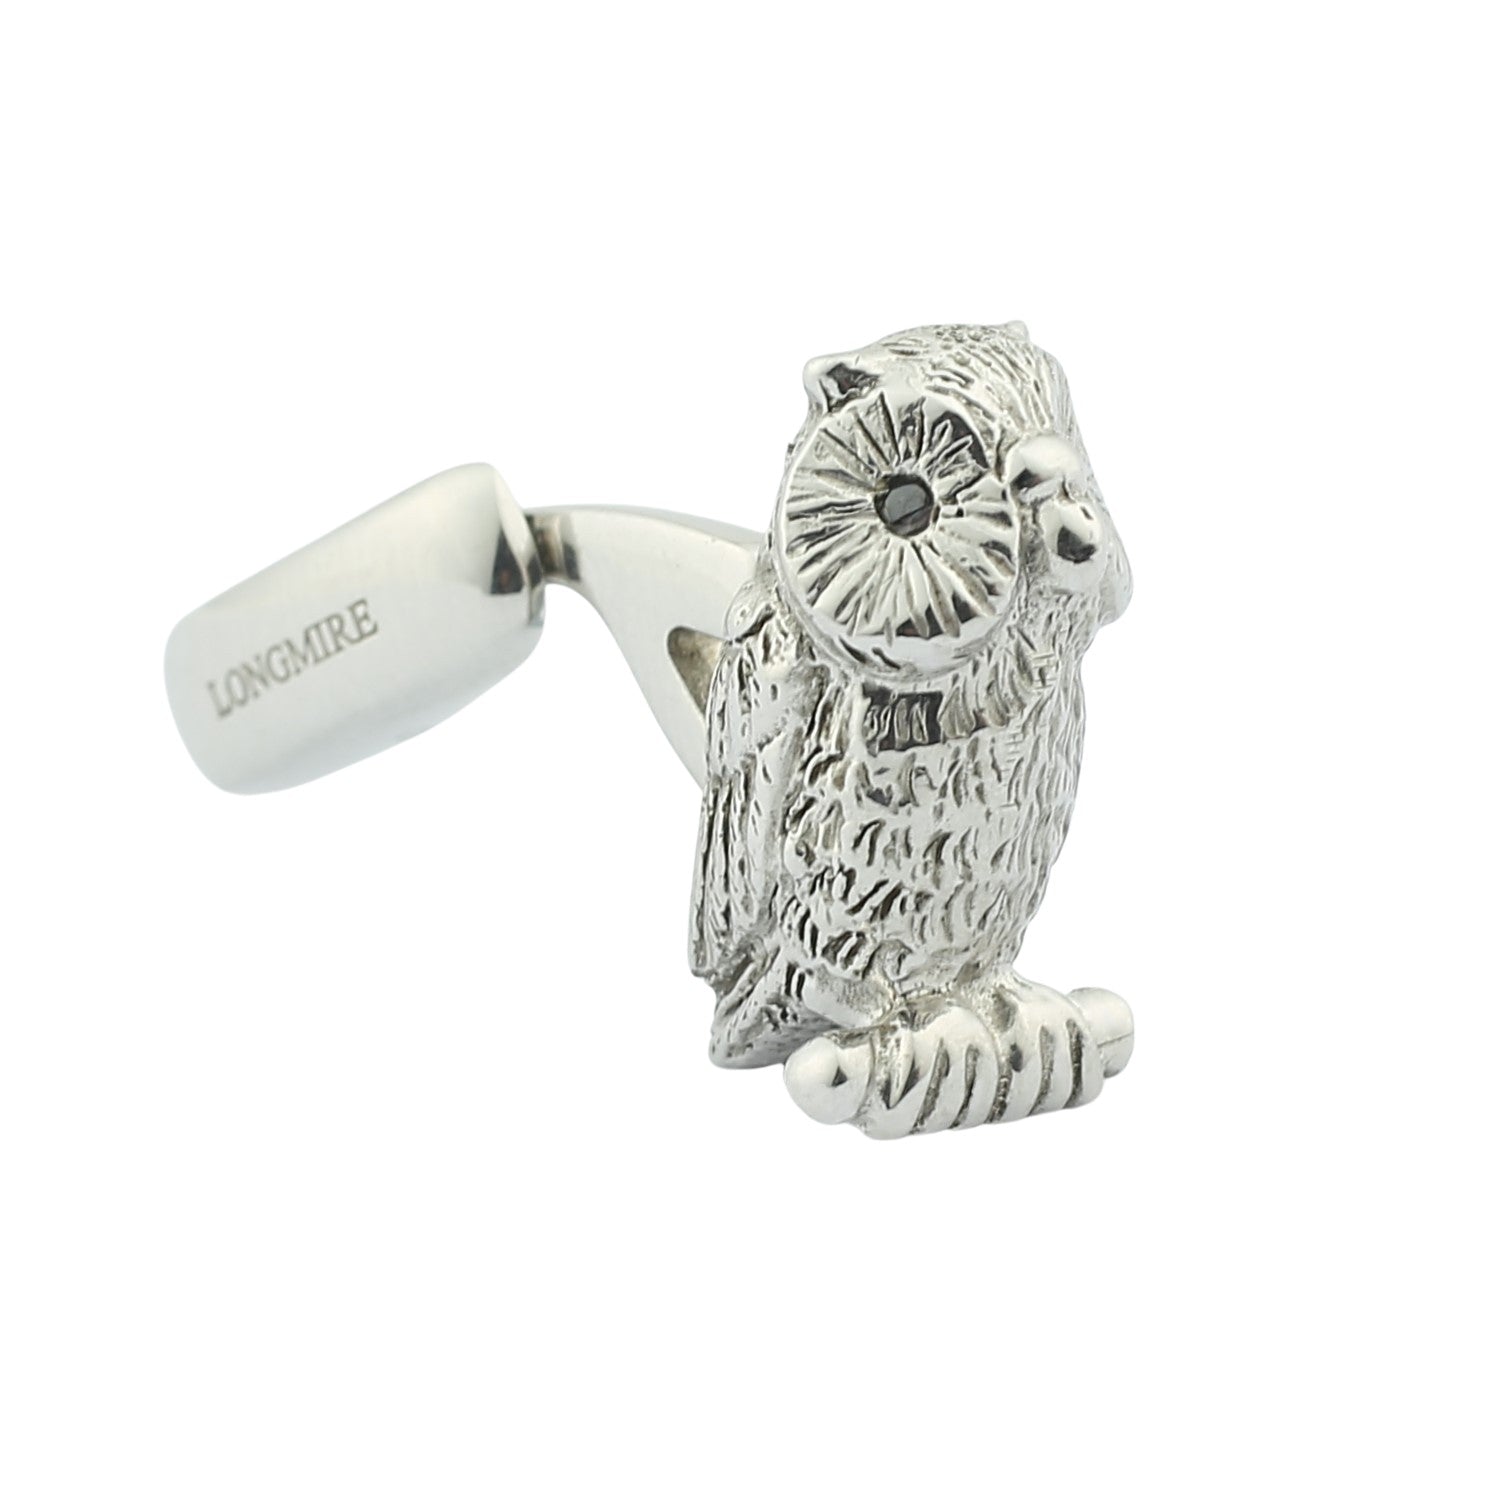 black diamond eyed owl cufflinks in silver - side front main